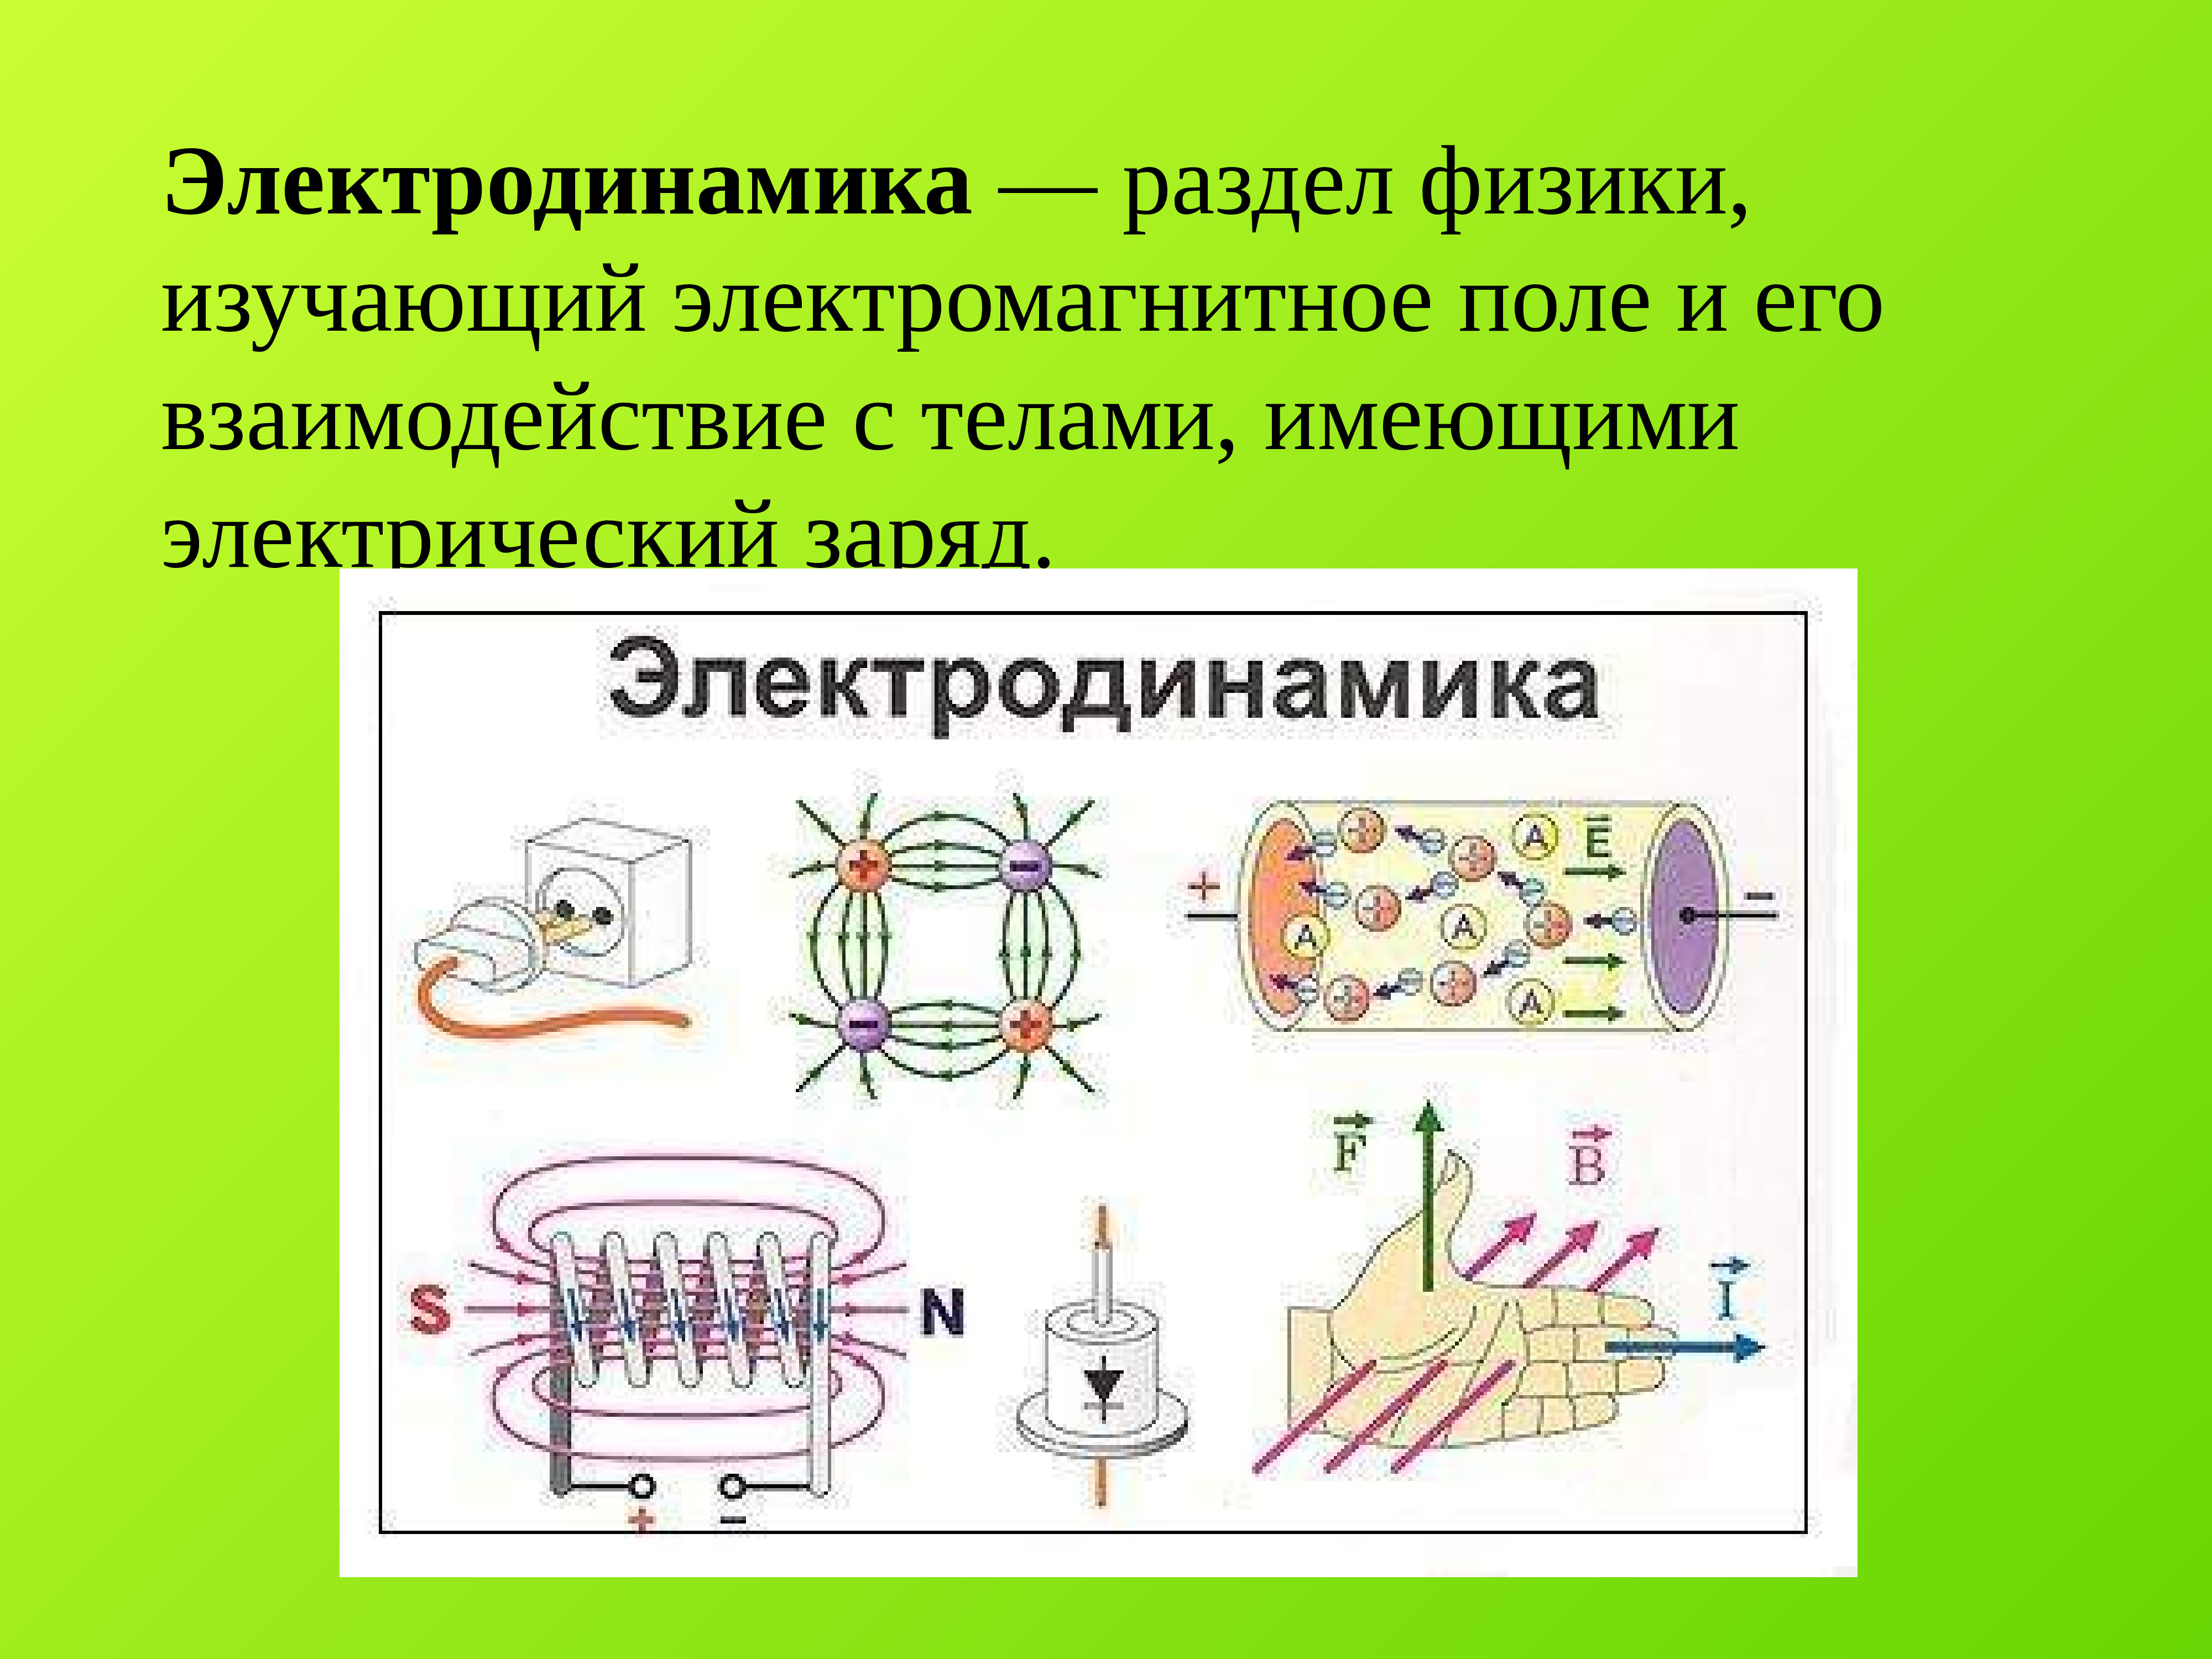 Разделы физики 8 класс. Електродинаміка. Электродинамика. Разделы электродинамики. Электродинамика магнитное поле.